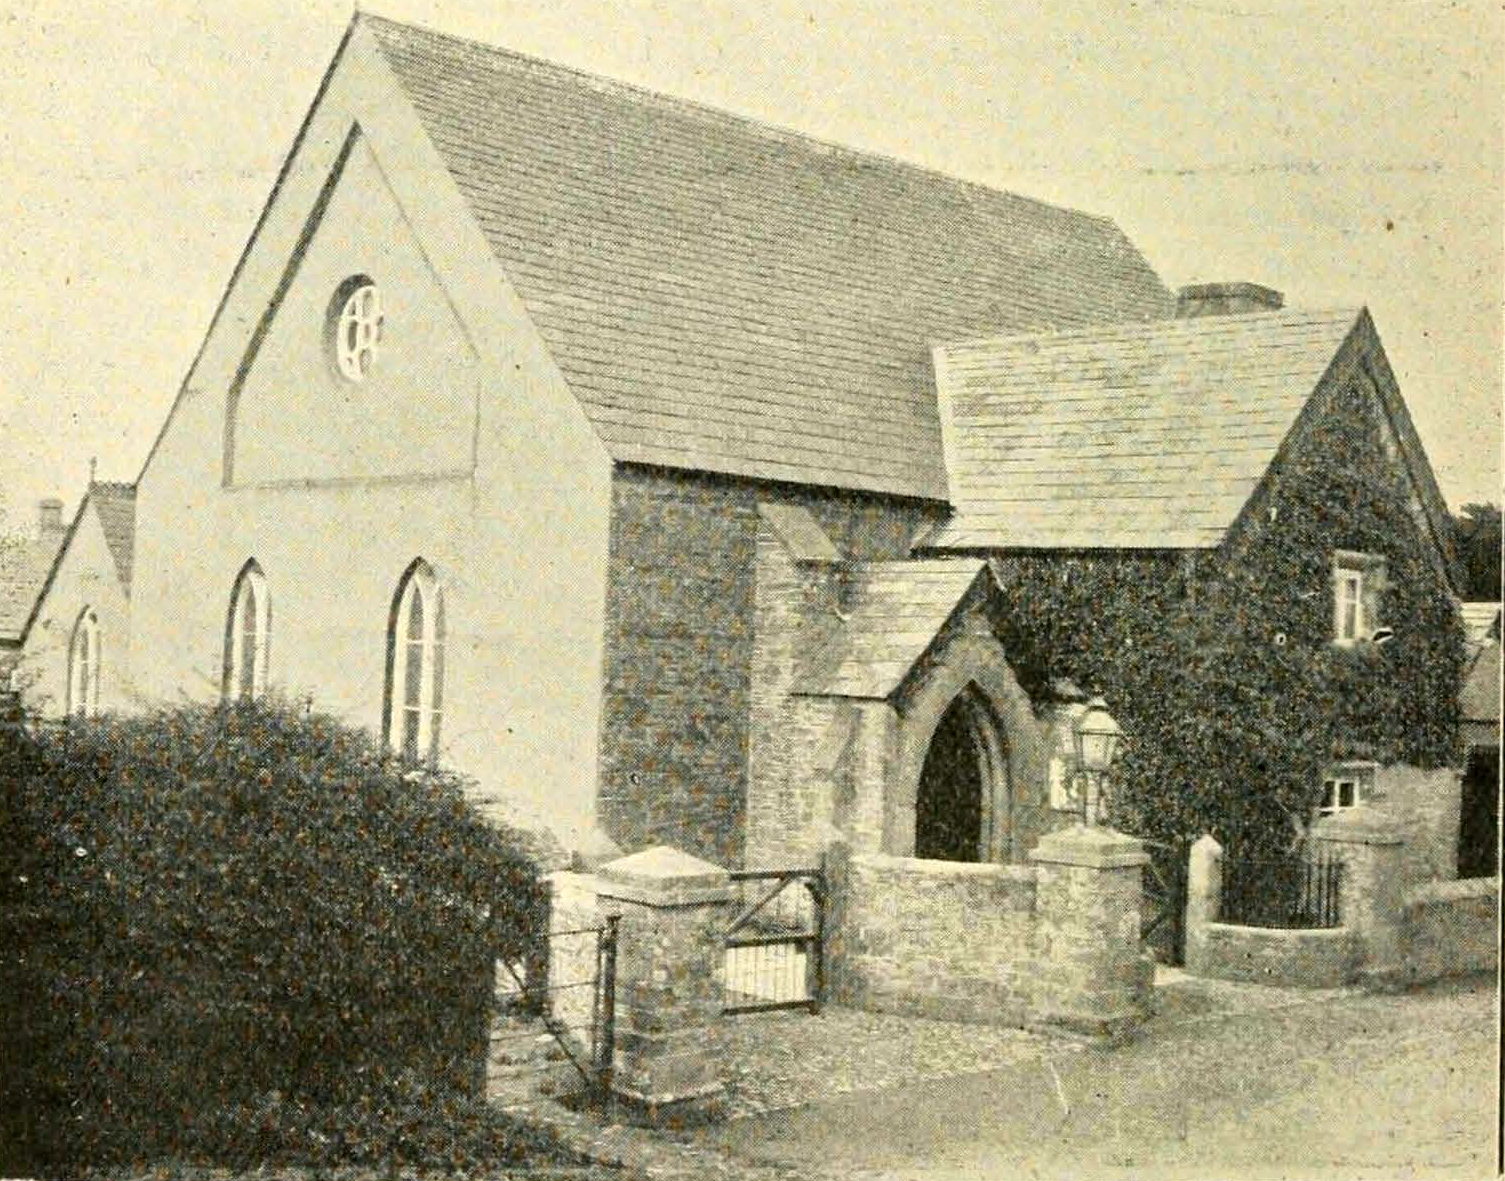 Trevadlock Chapel in 1900